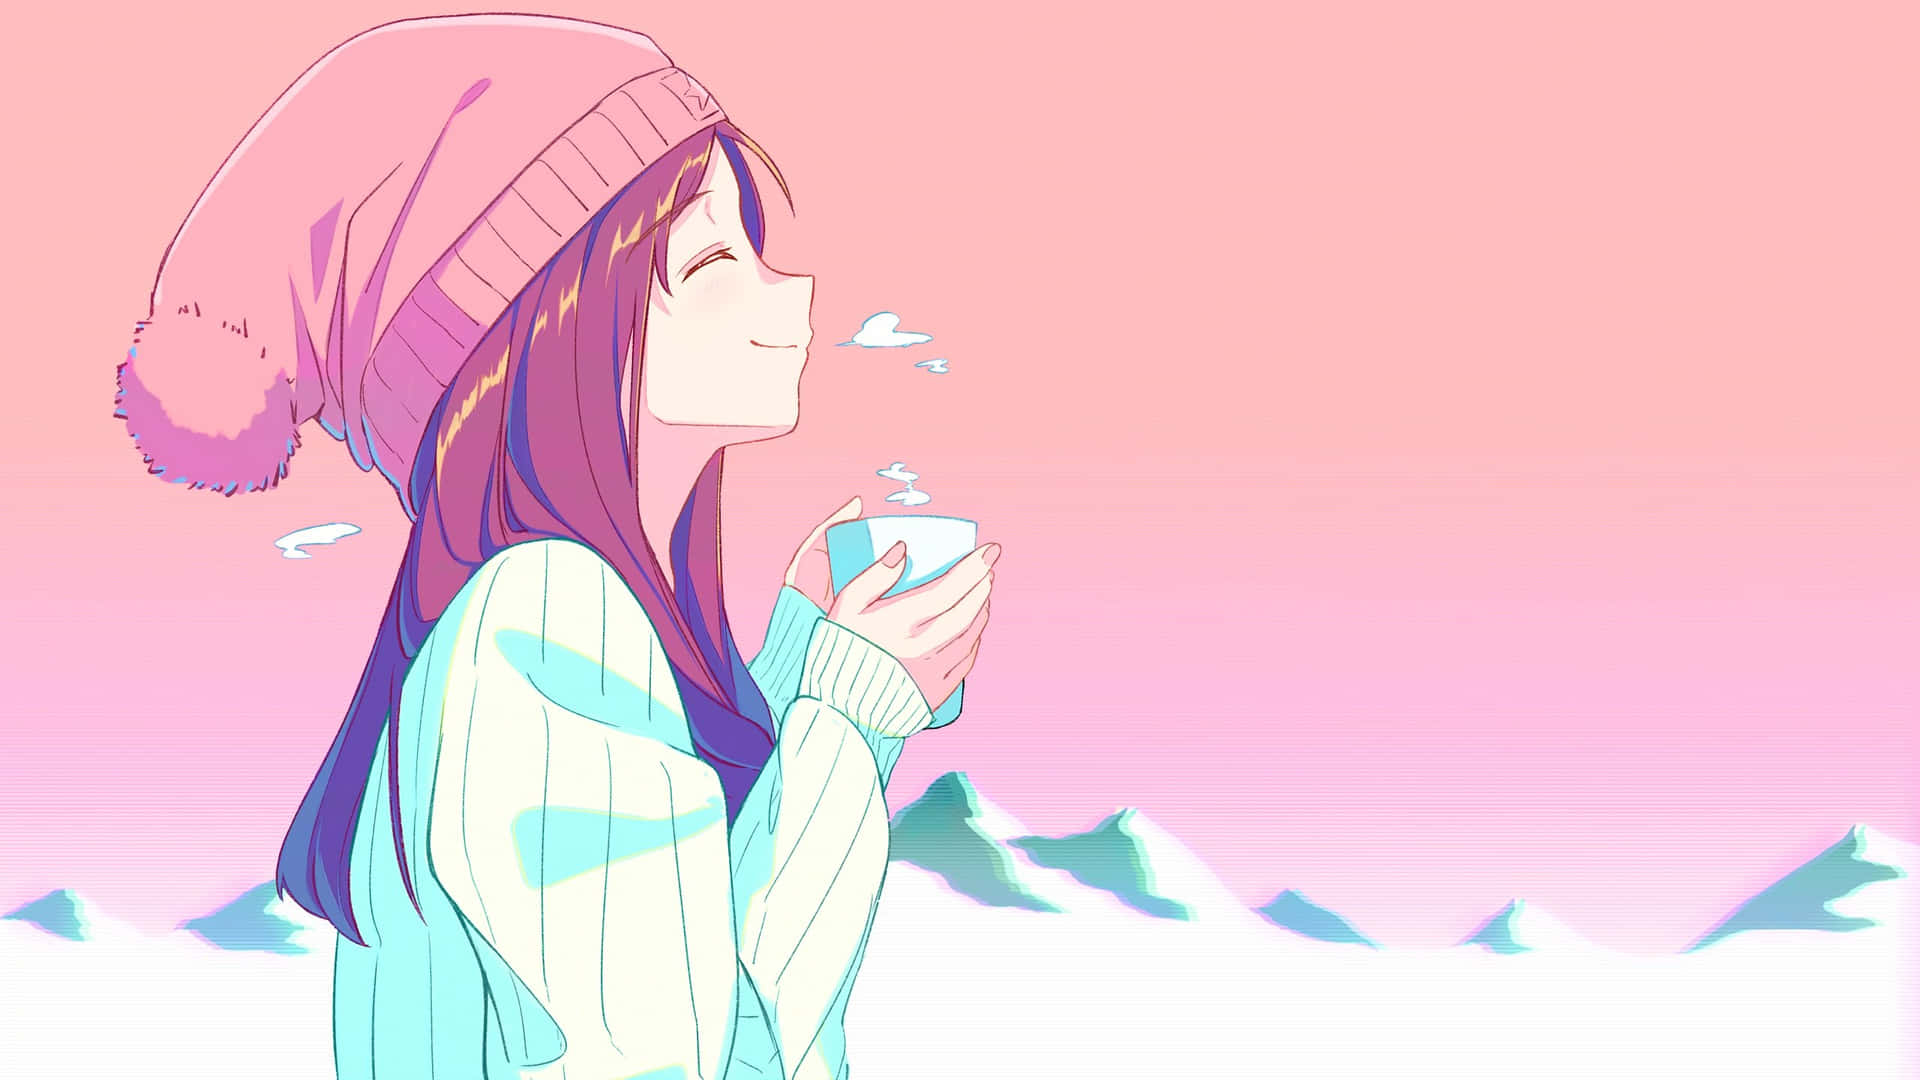 Serenityin Snow Anime Girl2560x1440 Wallpaper